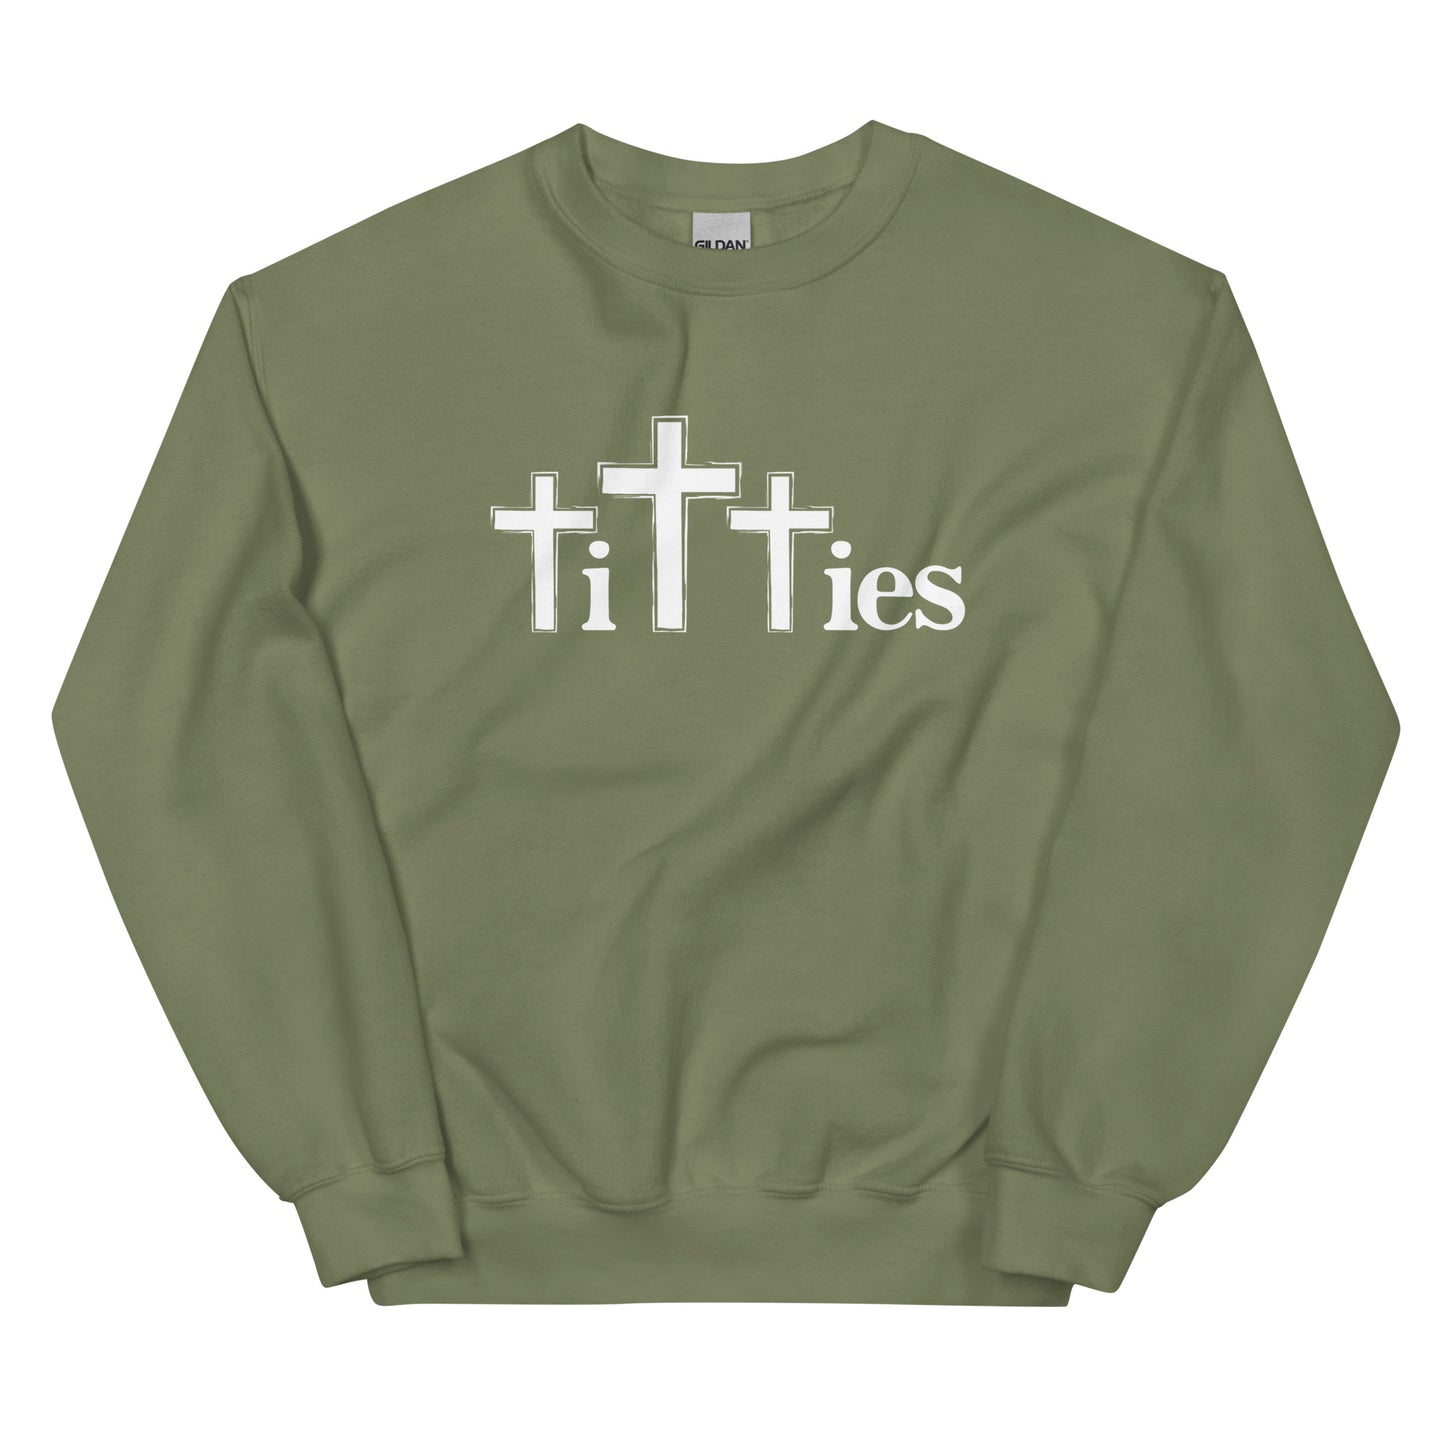 Titties (Crosses) Unisex Sweatshirt